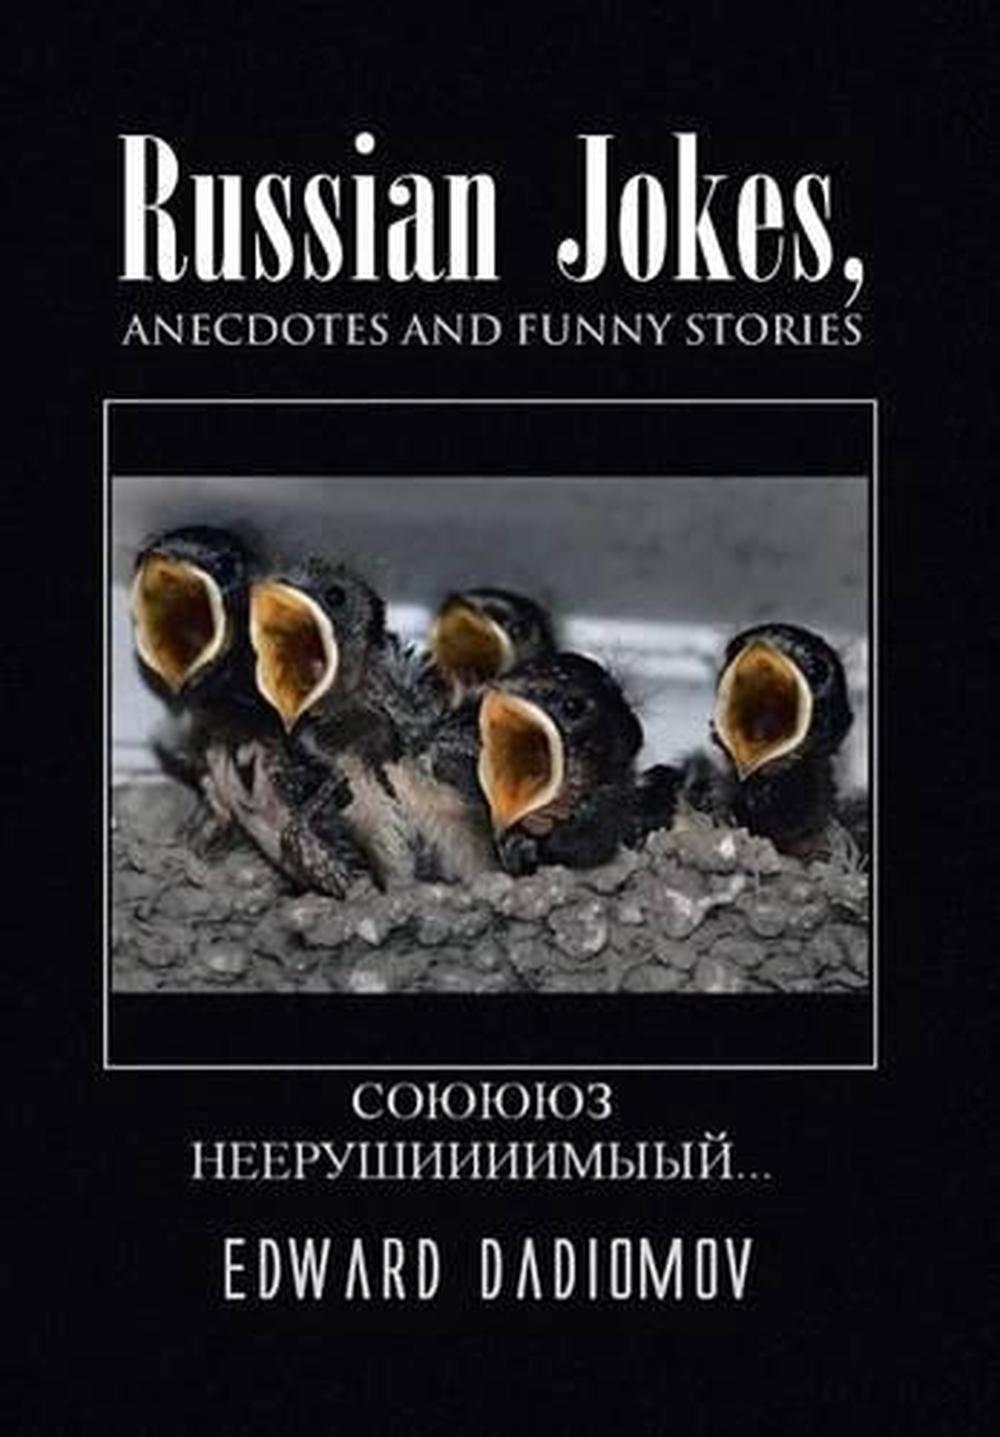 Russian Jokes Anecdotes And Funny Stories By Edward Dadiomov English Hardcove Ebay